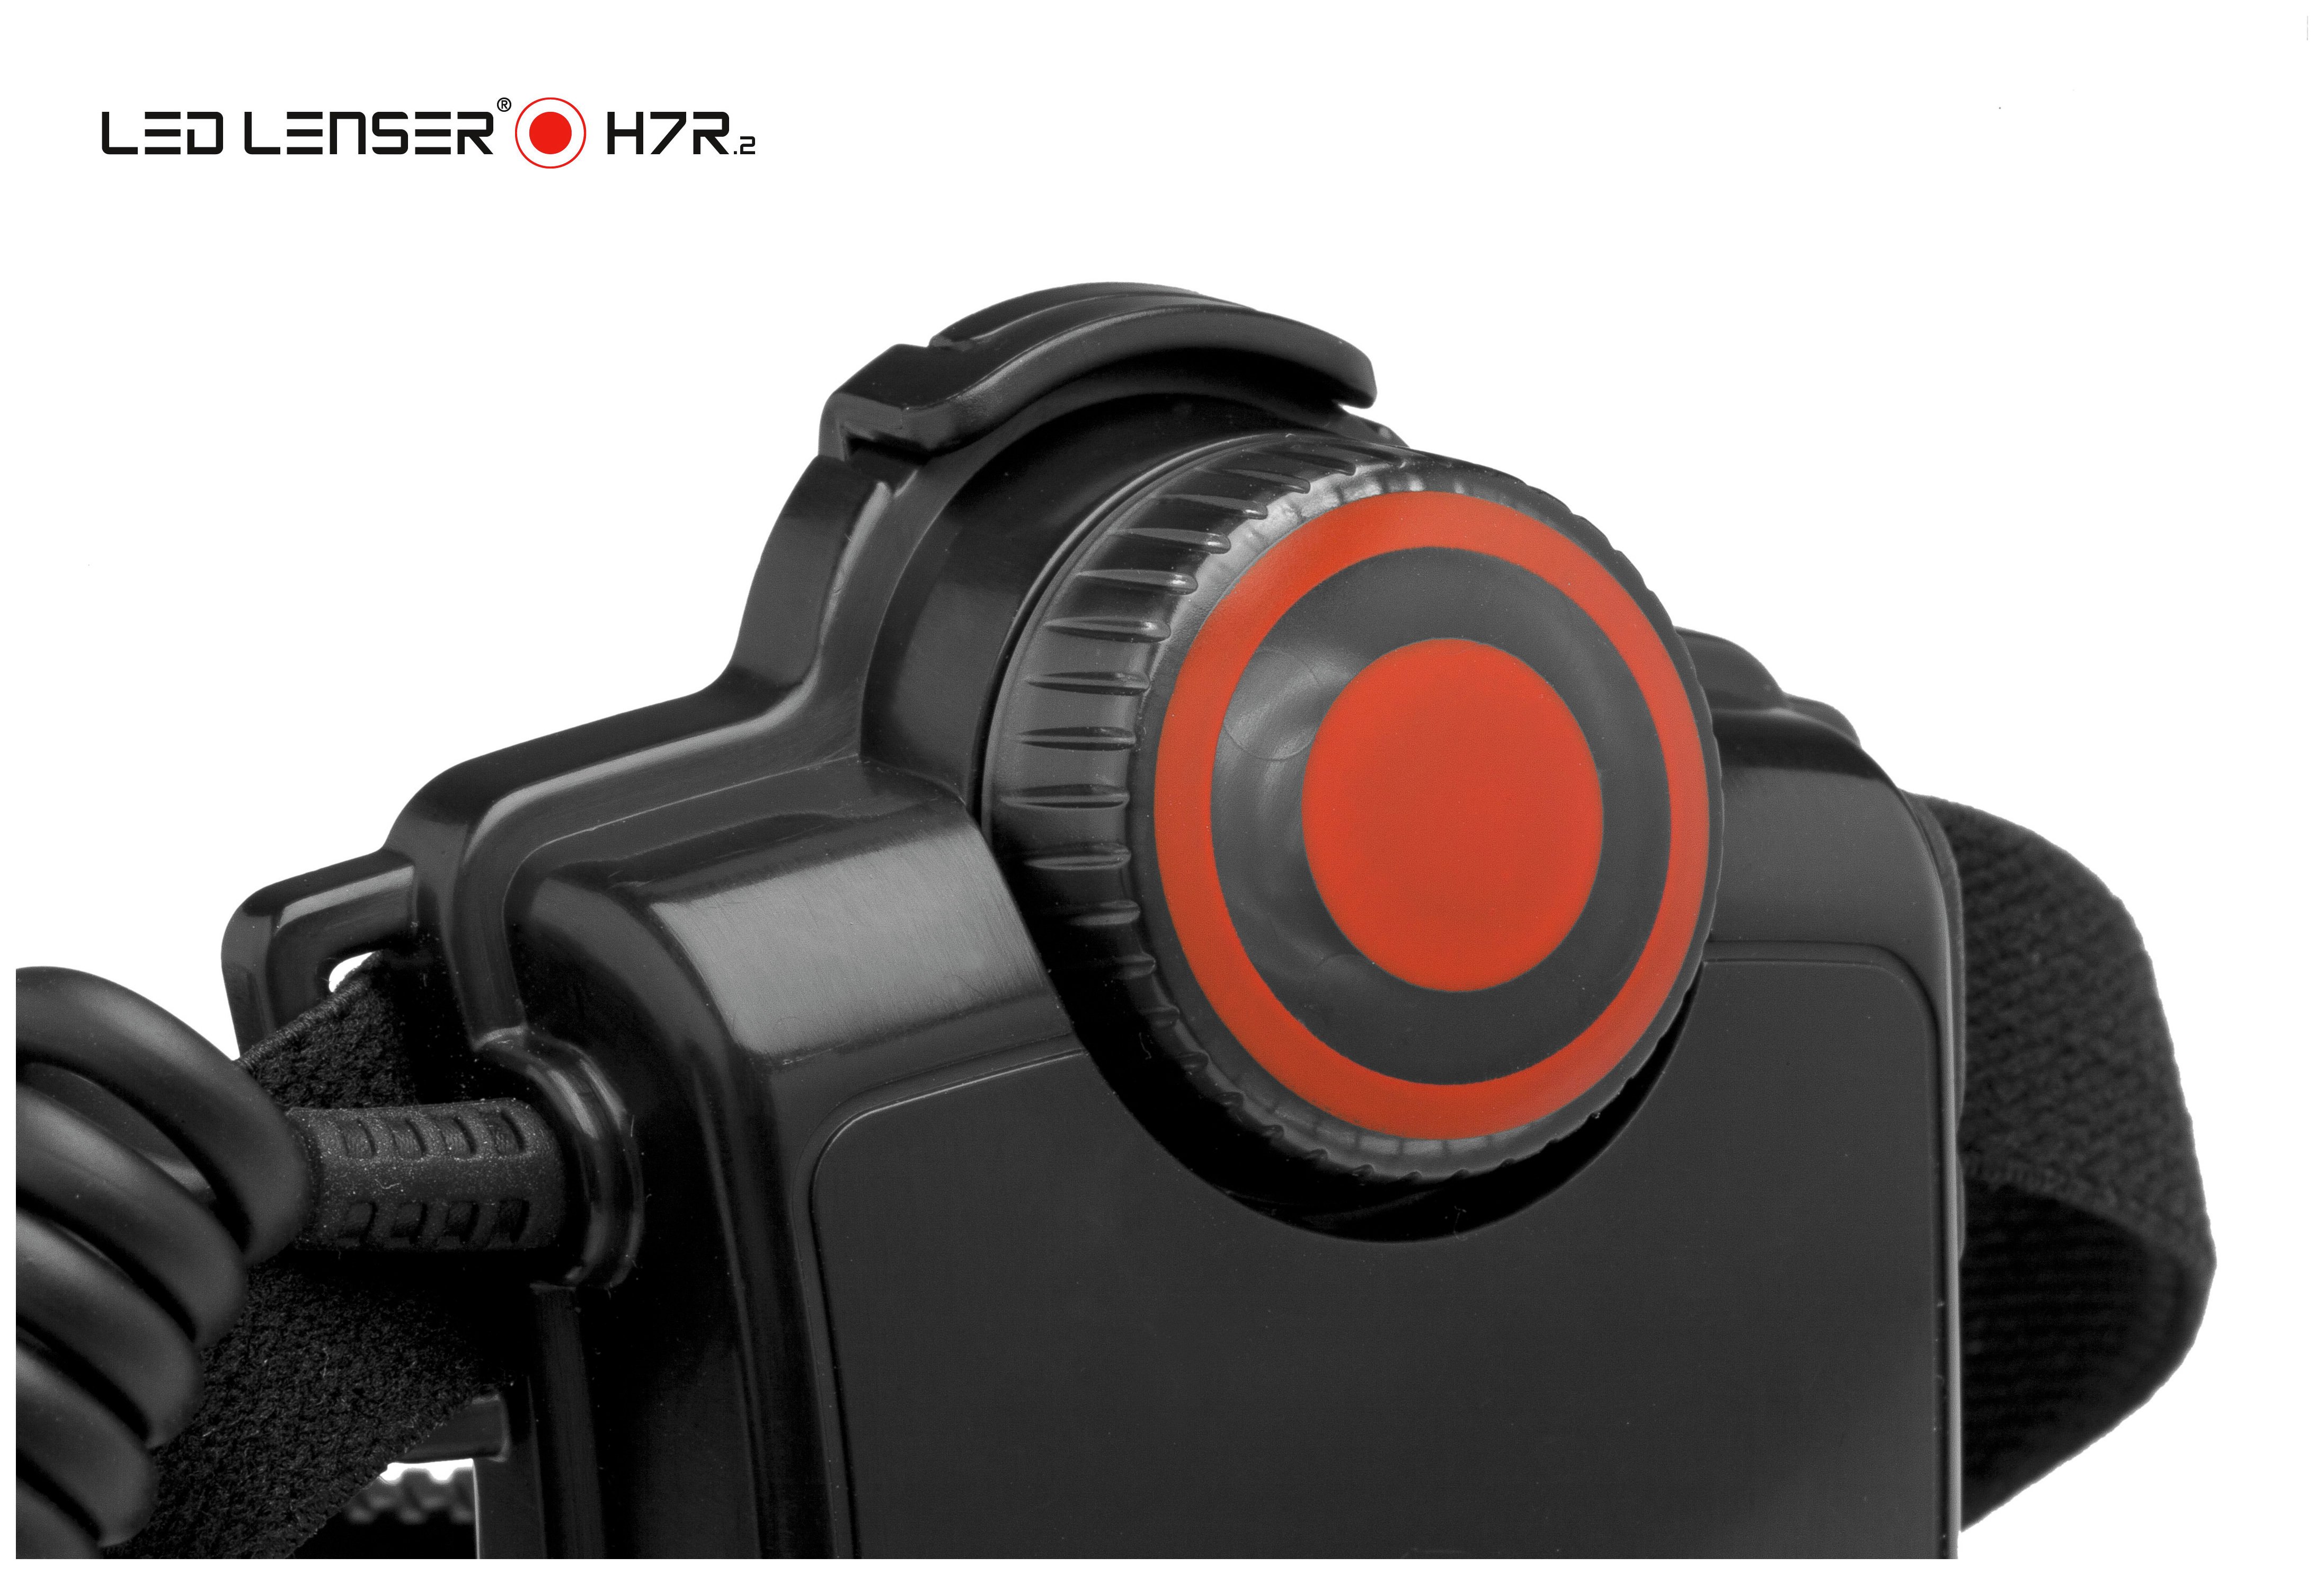 Led Lenser H7r2 Rechargeable Head Lamp Reviews